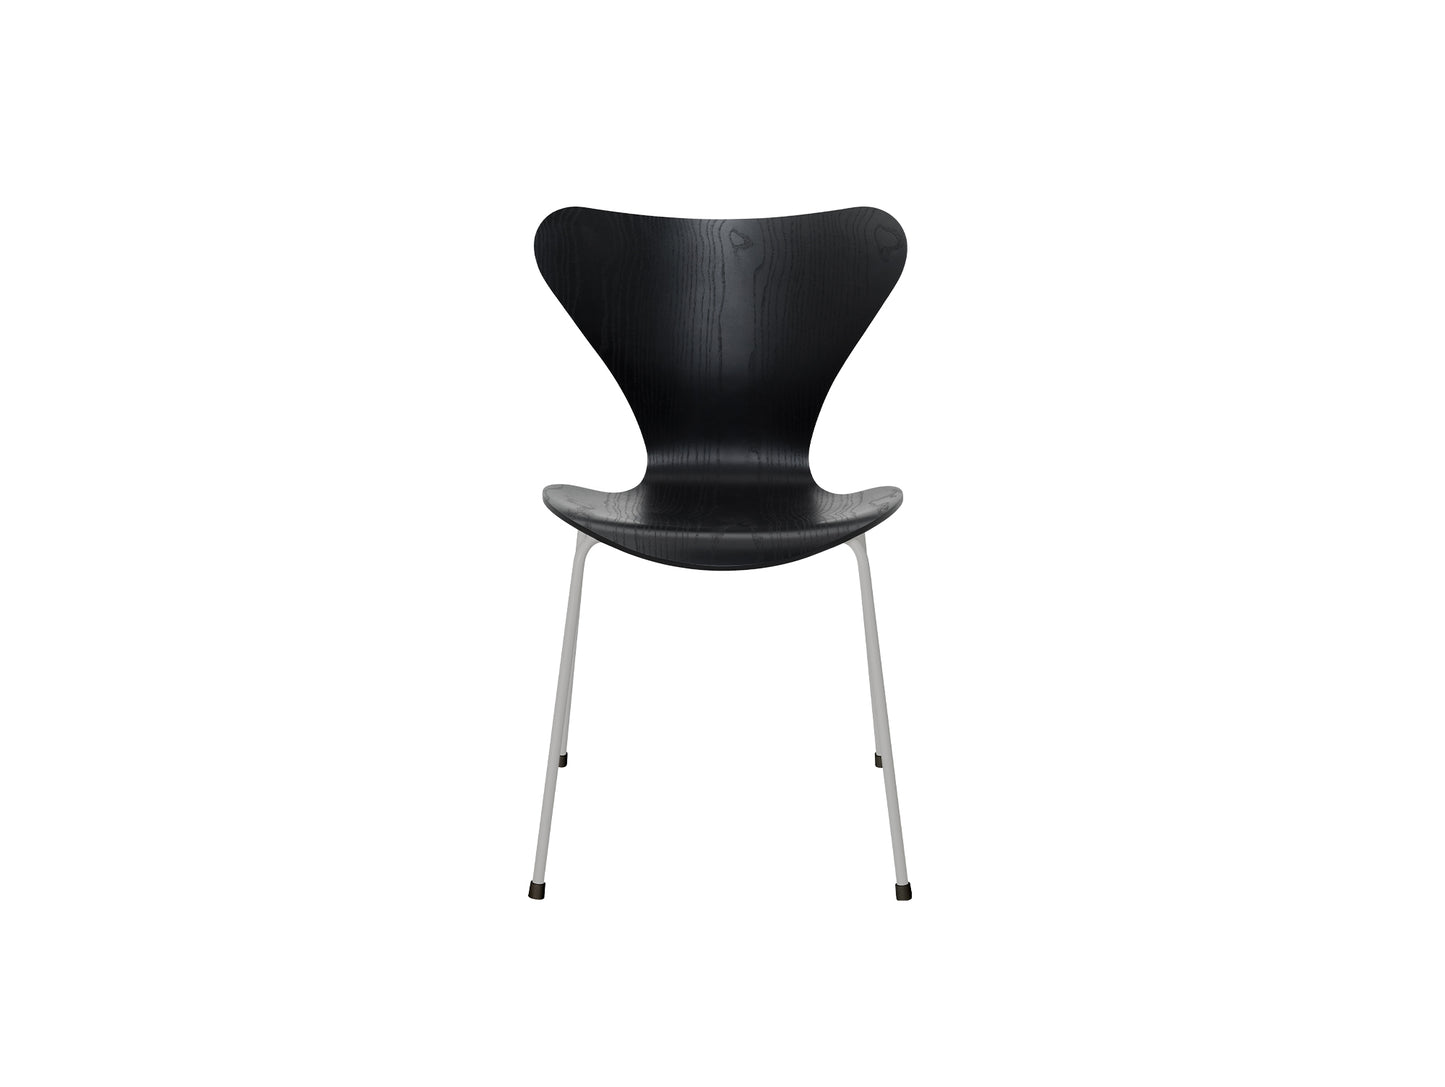 Series 7™ 3107 Dining Chair by Fritz Hansen - Black Coloured Ash Veneer Shell / Nine Grey Steel